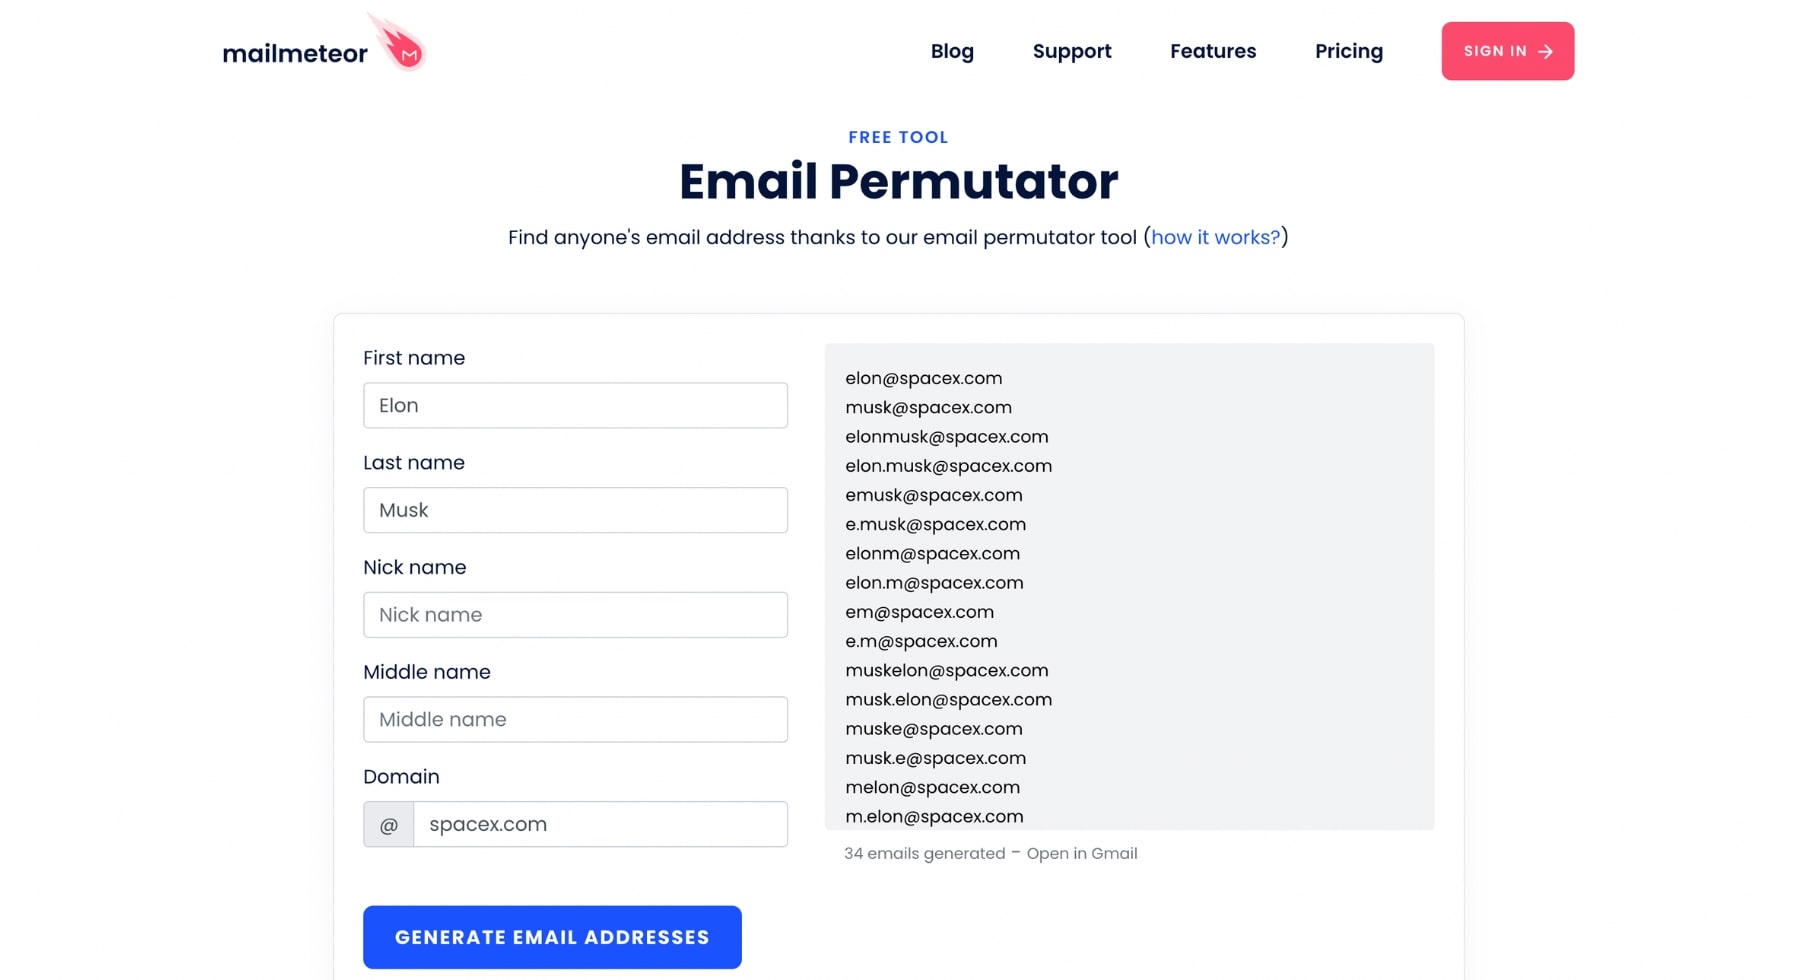 Email permutator